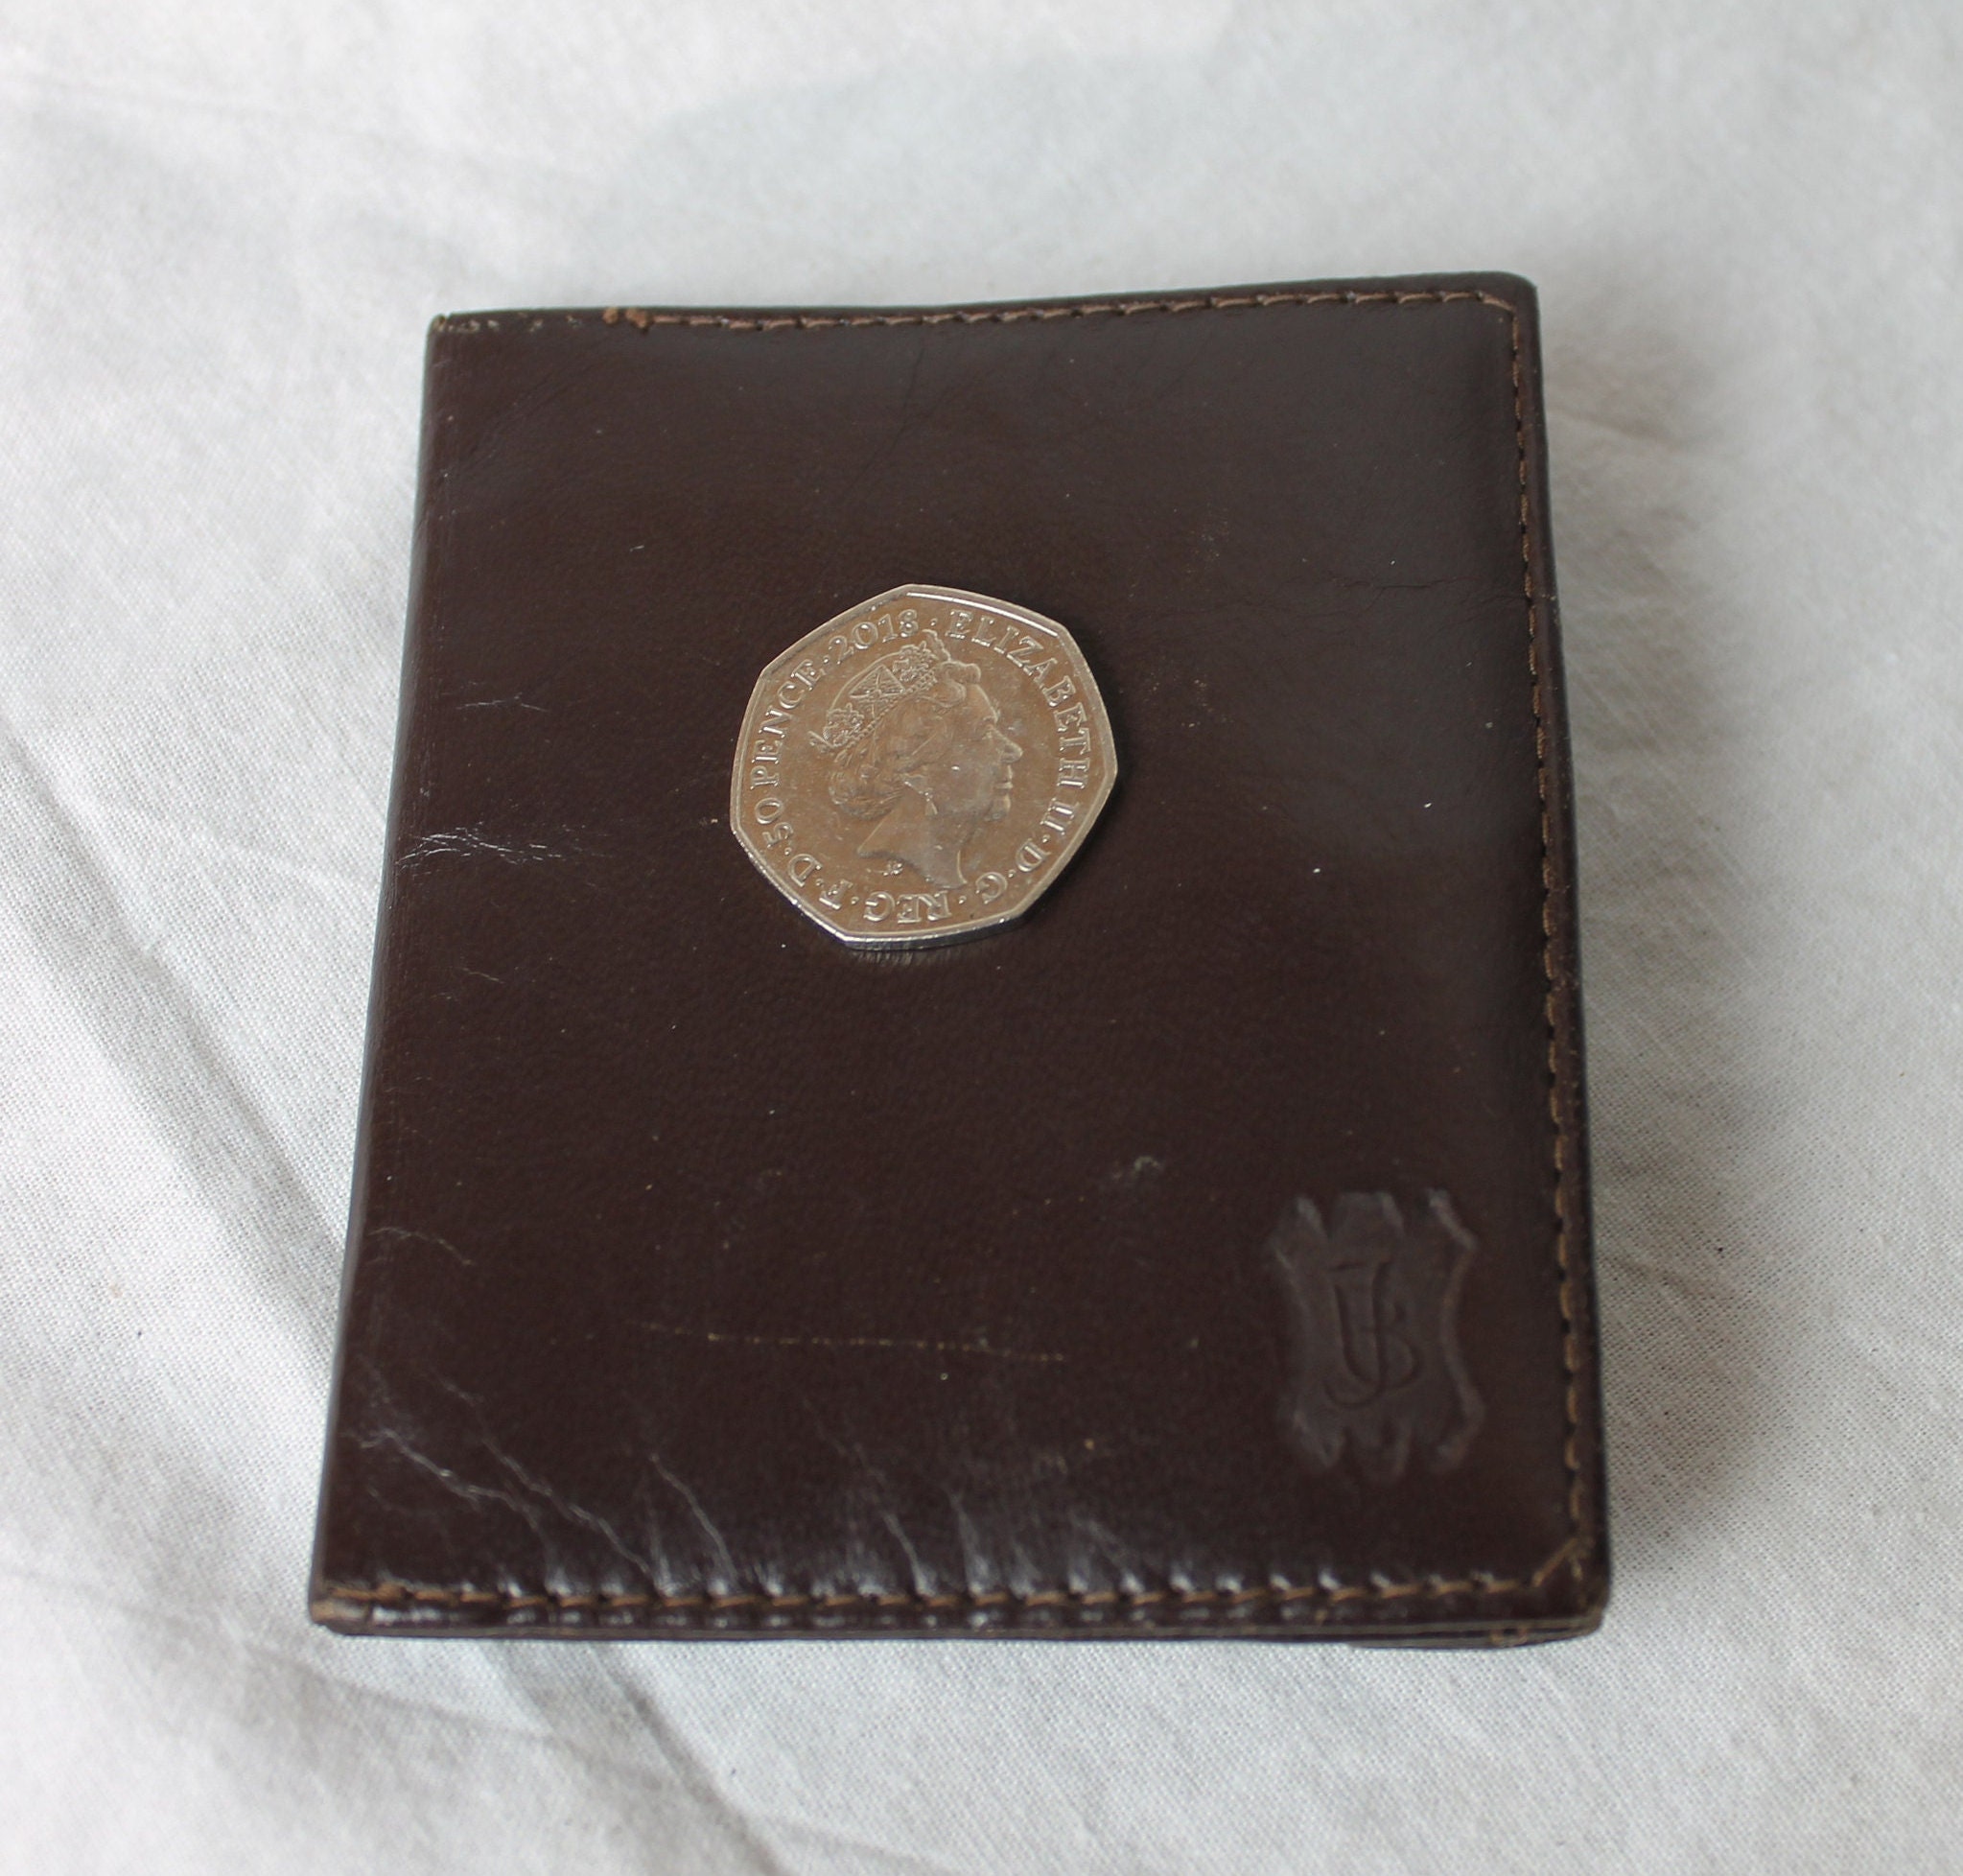 Leather Men Wallet RFID Blocking, Faneam Bifold Men's Wallet Leather Vintage Men